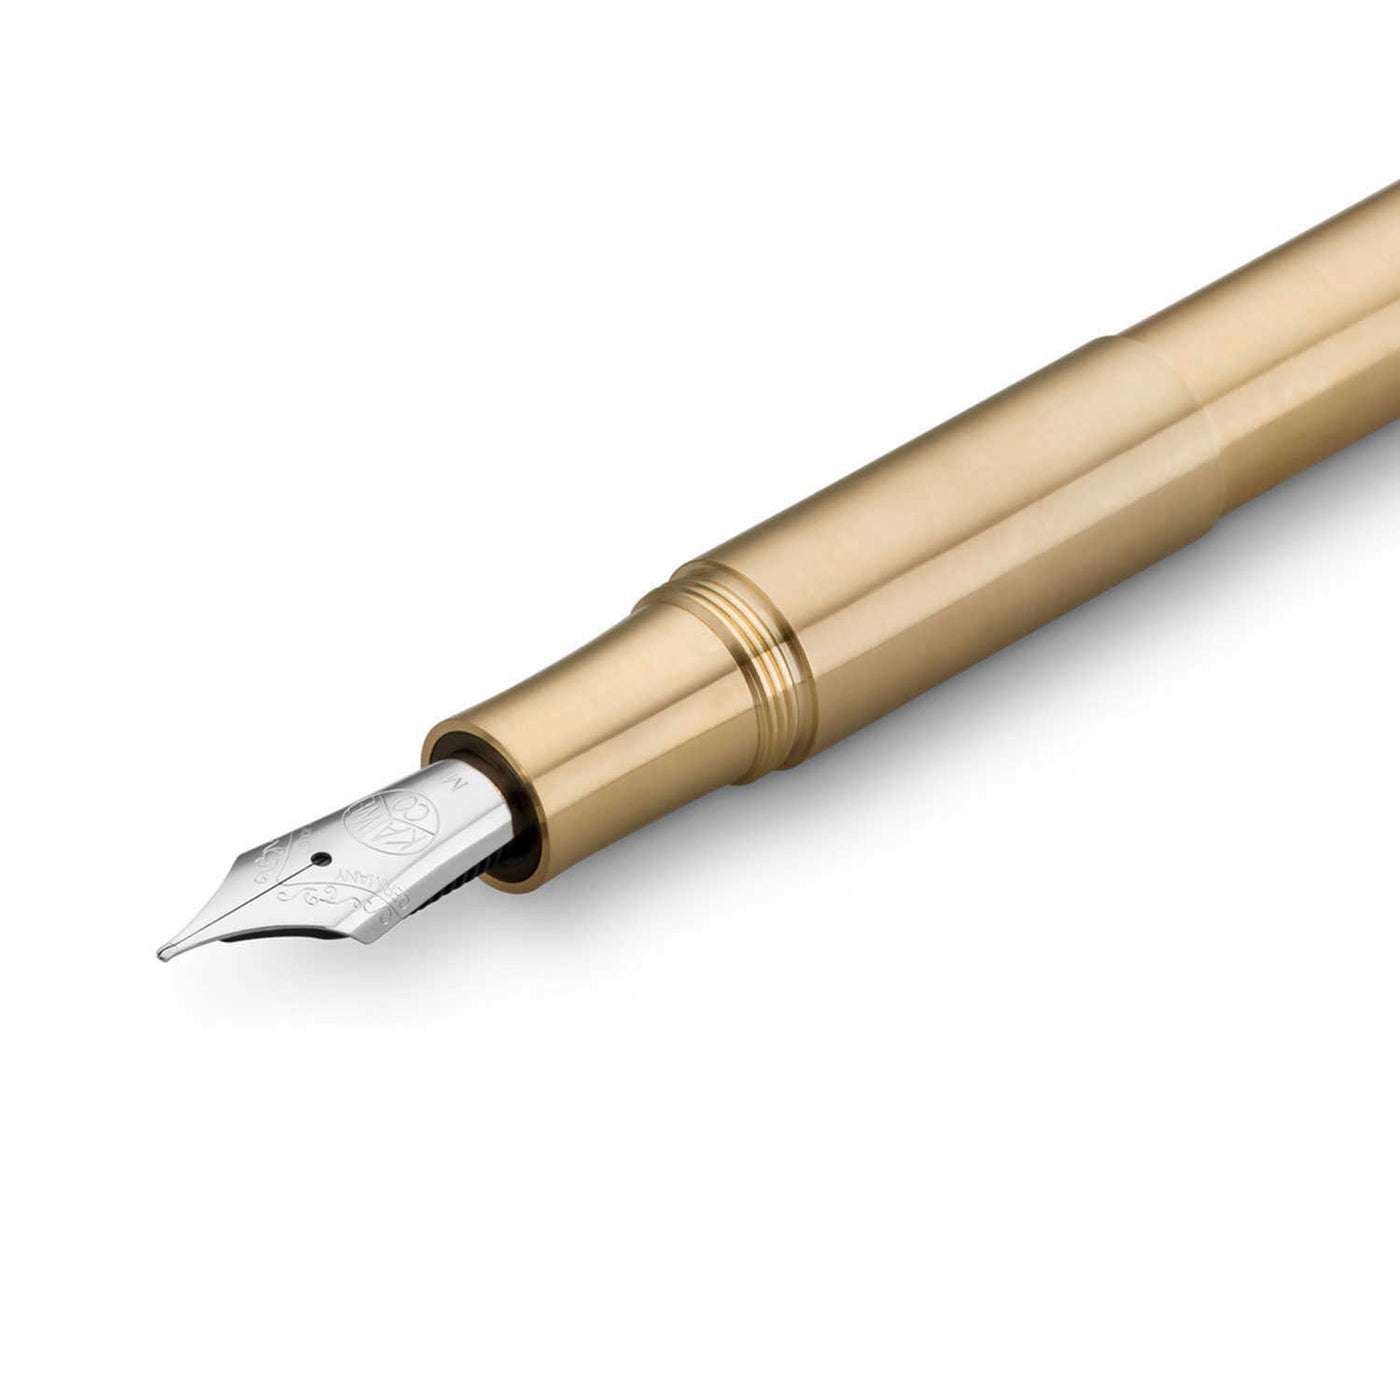 Kaweco Supra Fountain Pen with Optional Clip - Eco Brass 2